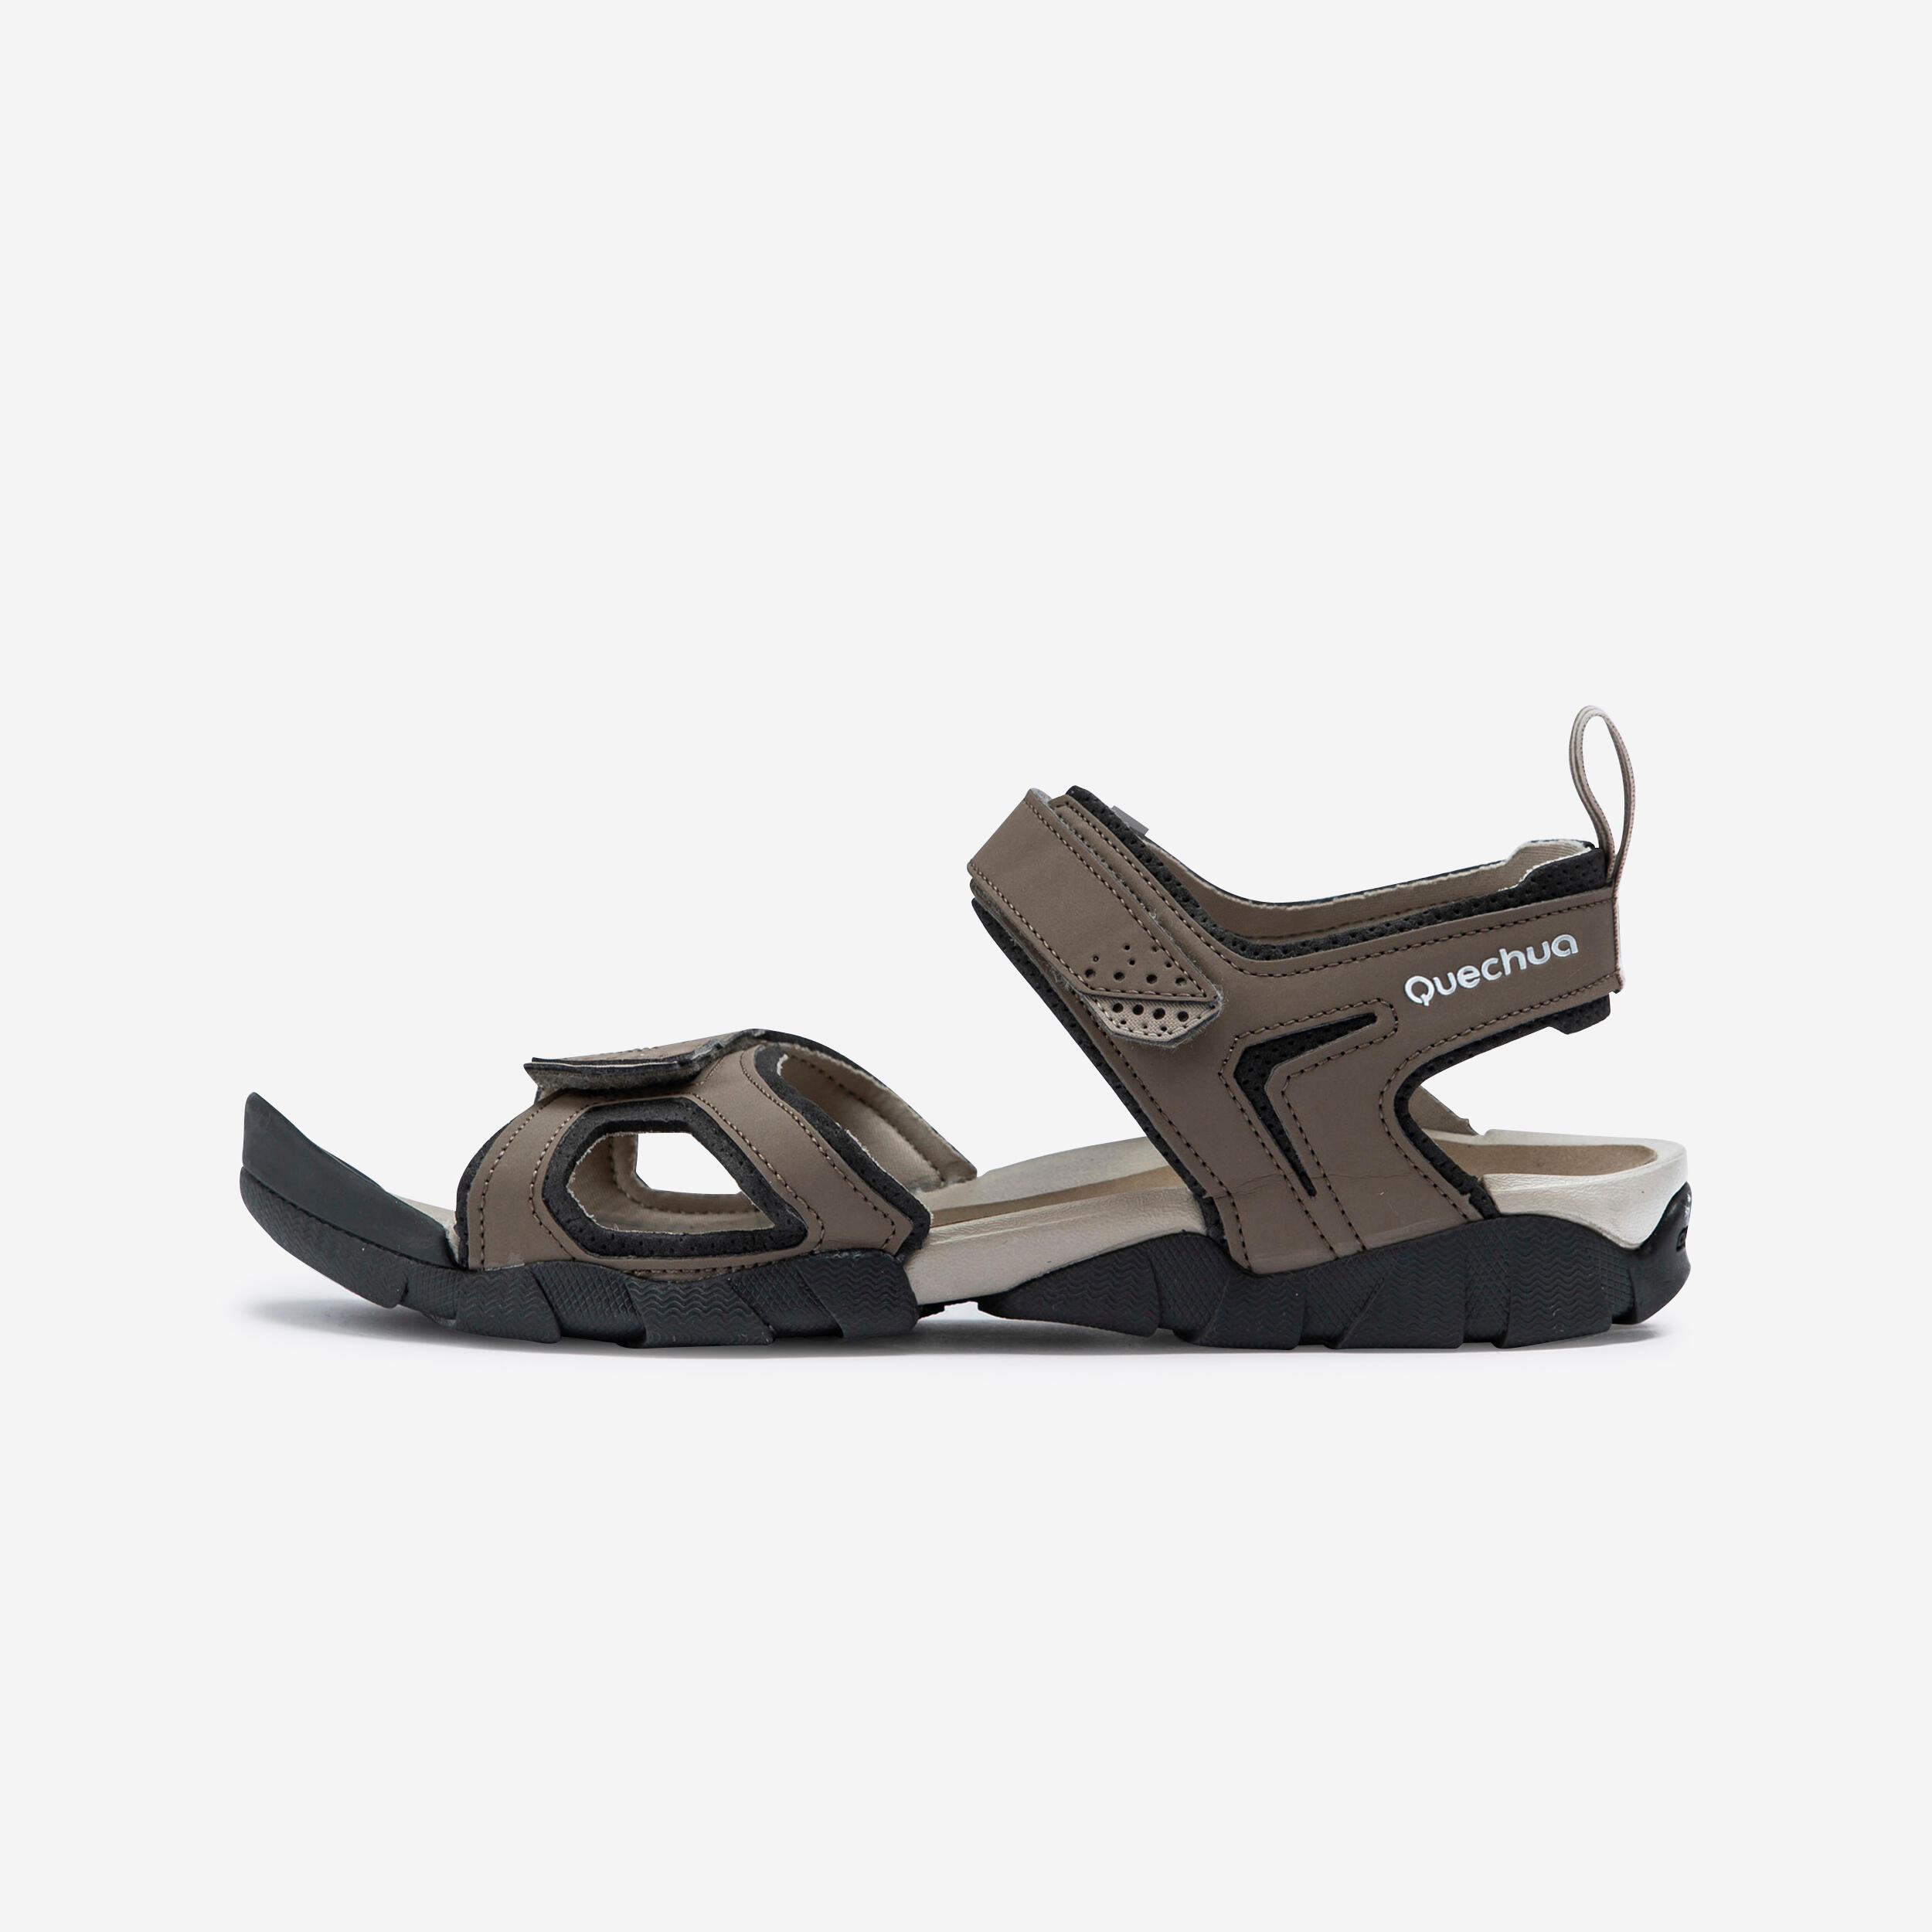 Shop Decathlon Outdoor Sandals online | Lazada.com.ph